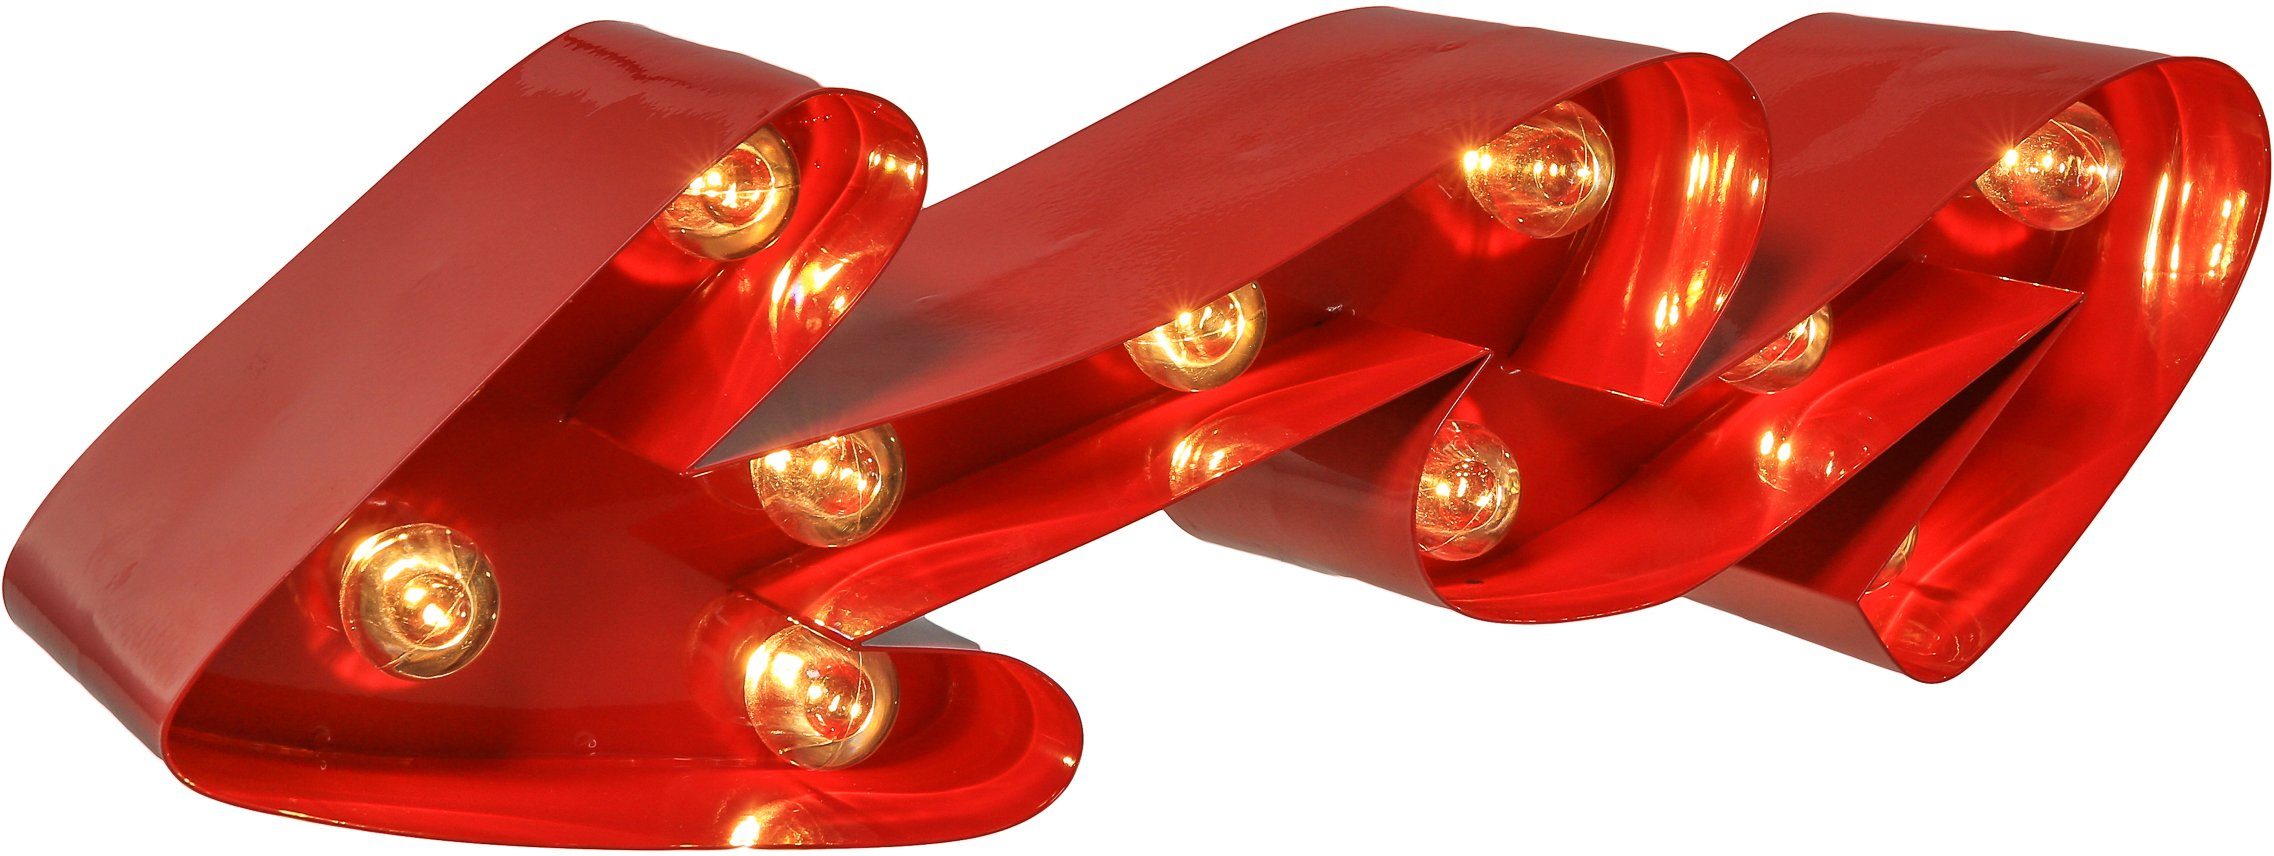 MARQUEE LIGHTS Tischlampe Arrow, - integriert, Dekolicht mit festverbauten LED Arrow Curved 38x12cm 10 LEDs Curved Wandlampe, fest LED Warmweiß